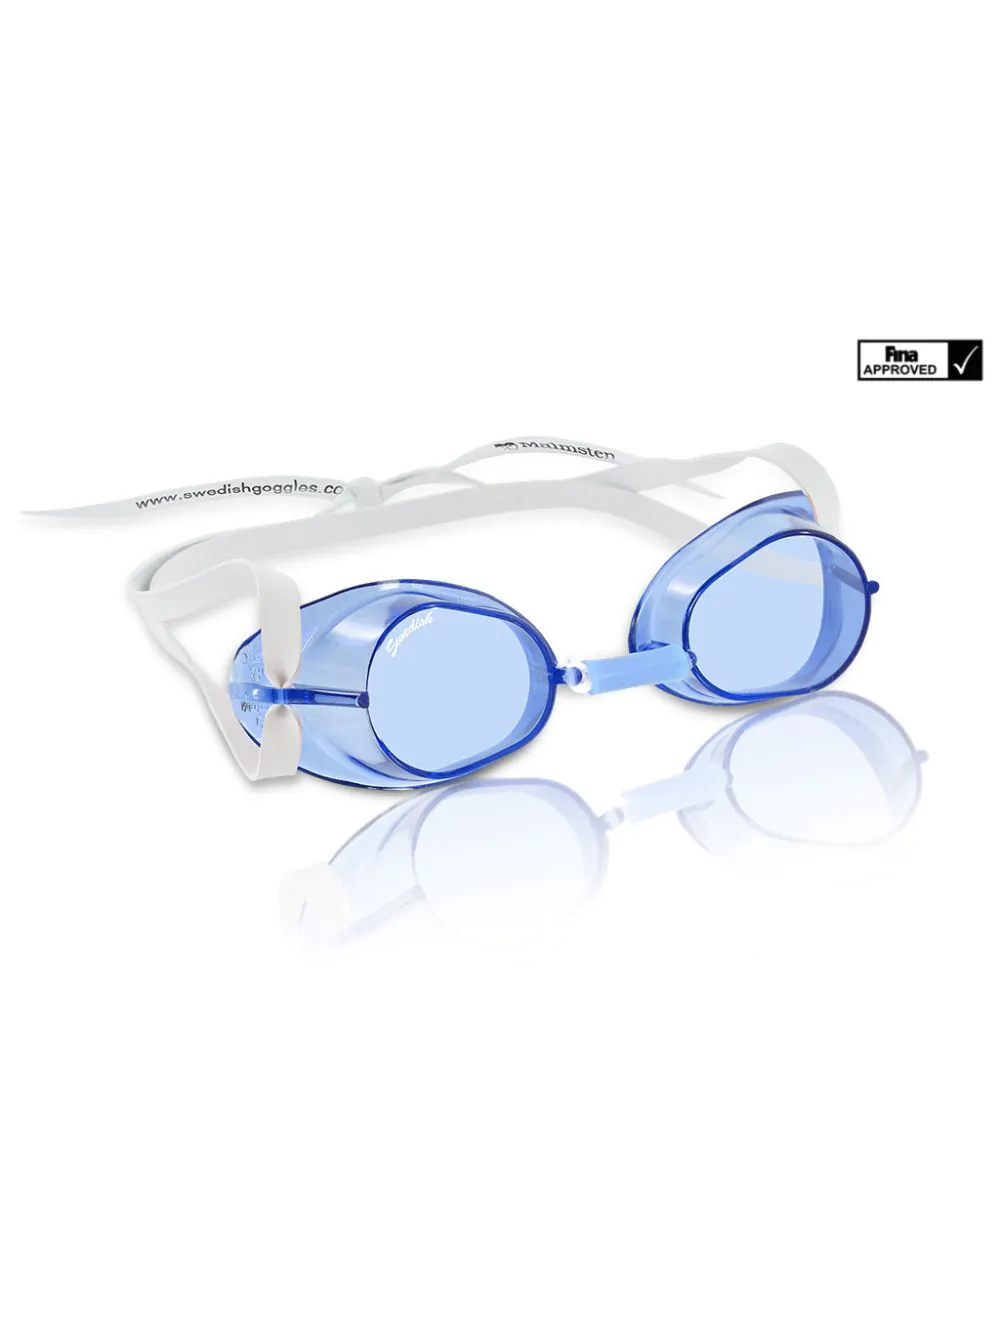 Schwedenbrille  Original Malmsten antifog blau /5 Stück Bausätze UVP 40,00 Euro  